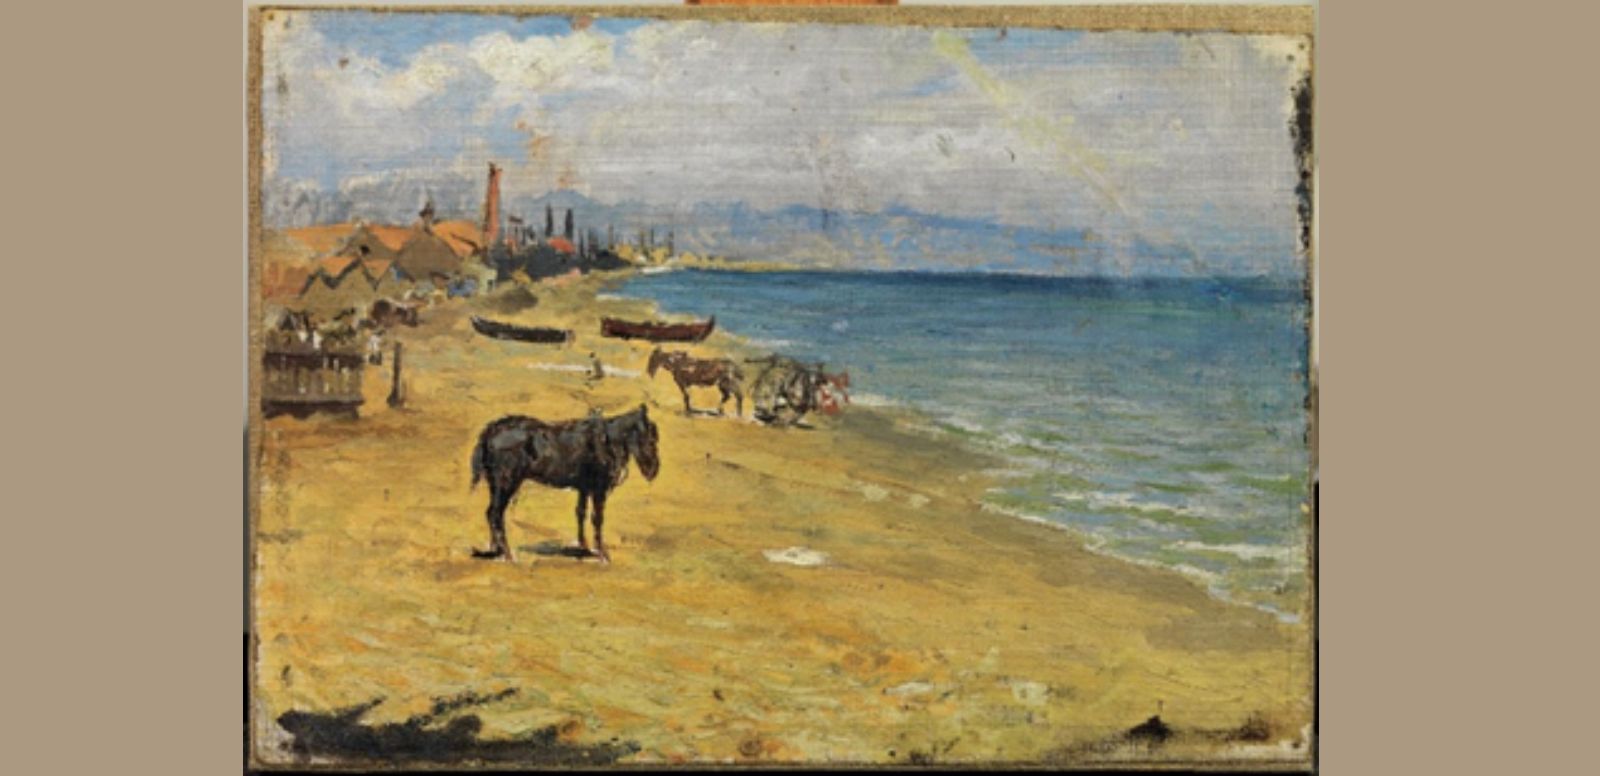 Pablo Picasso, “Playa de la Barceloneta” 1896